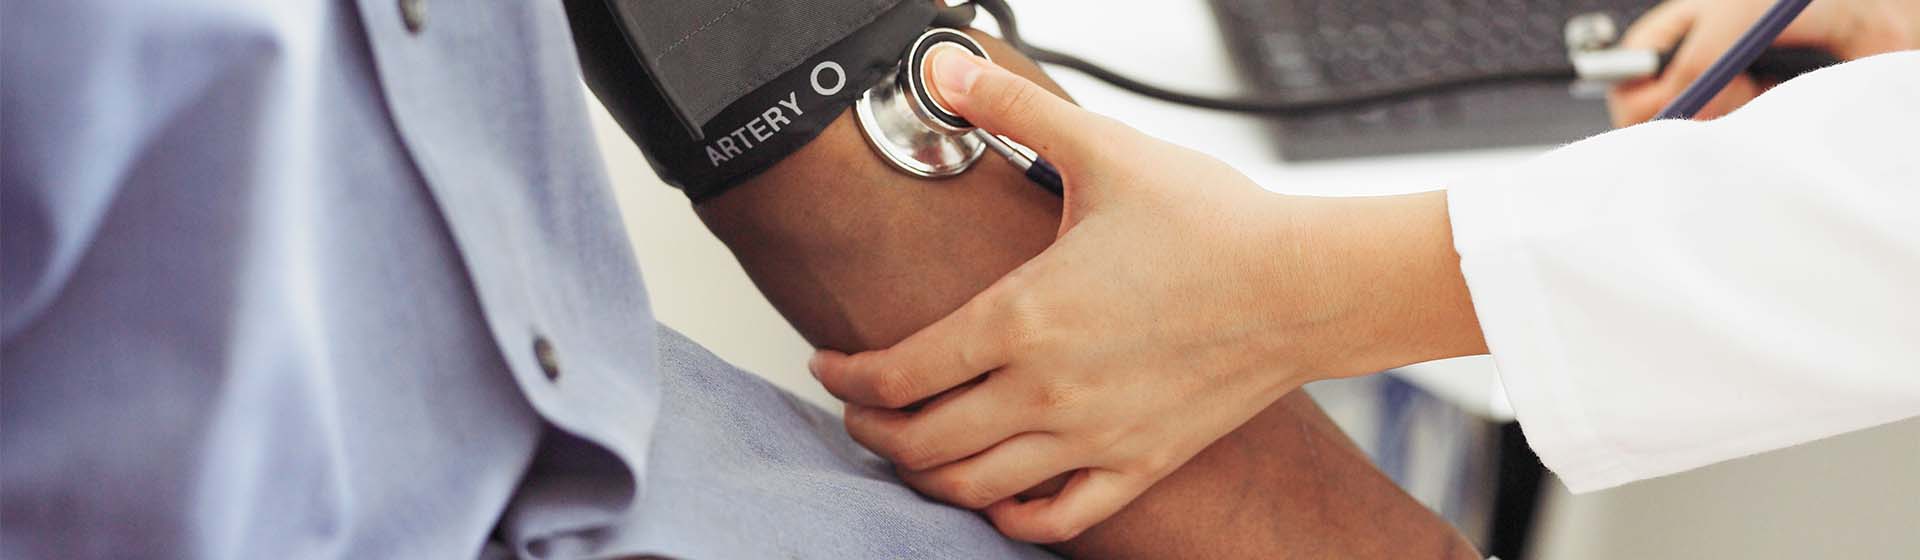 Provider measuring patient's blood pressure